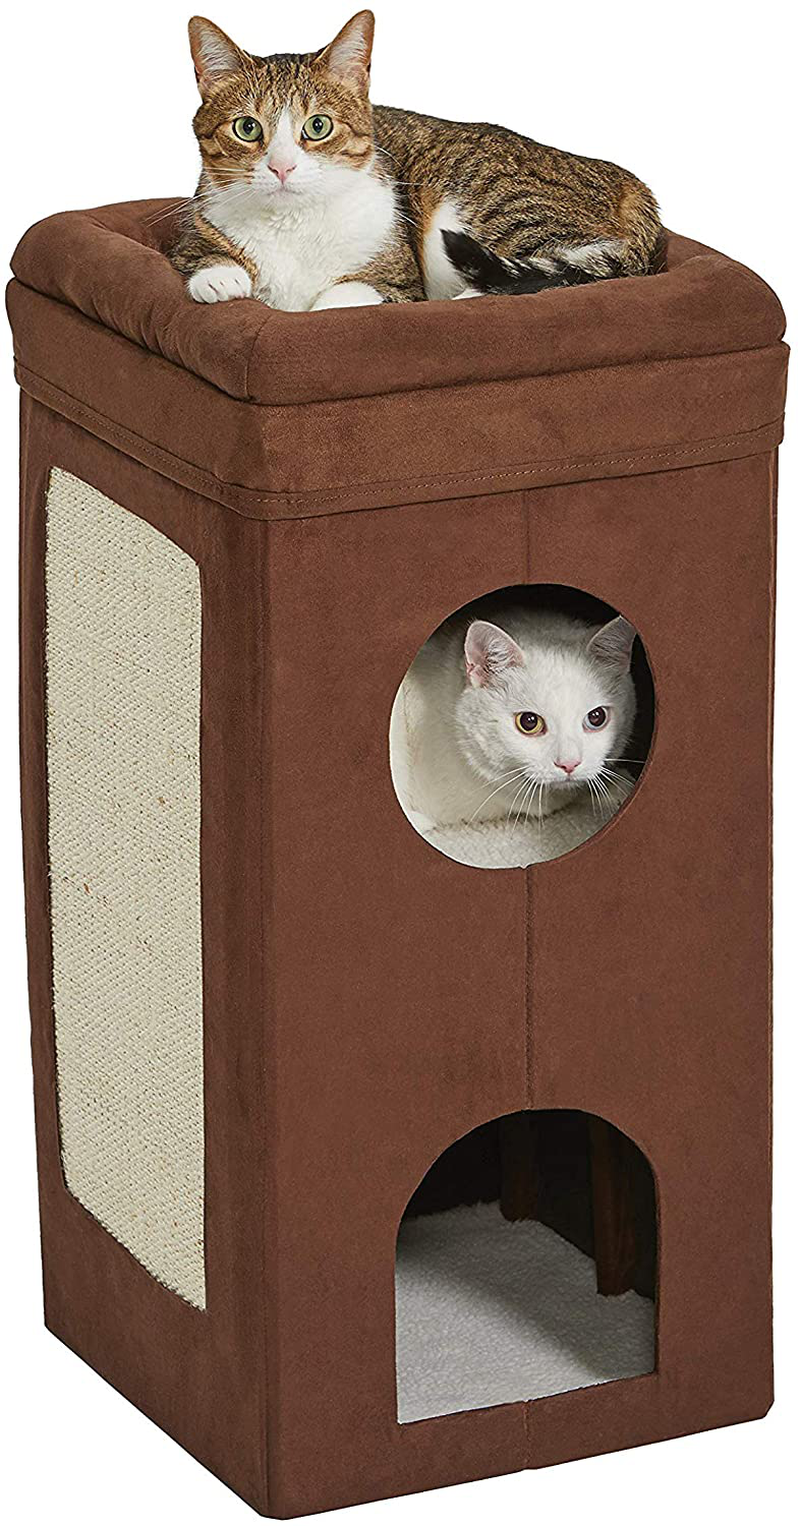 Midwest Curious Cat Cube, Cat House / Cat Condo